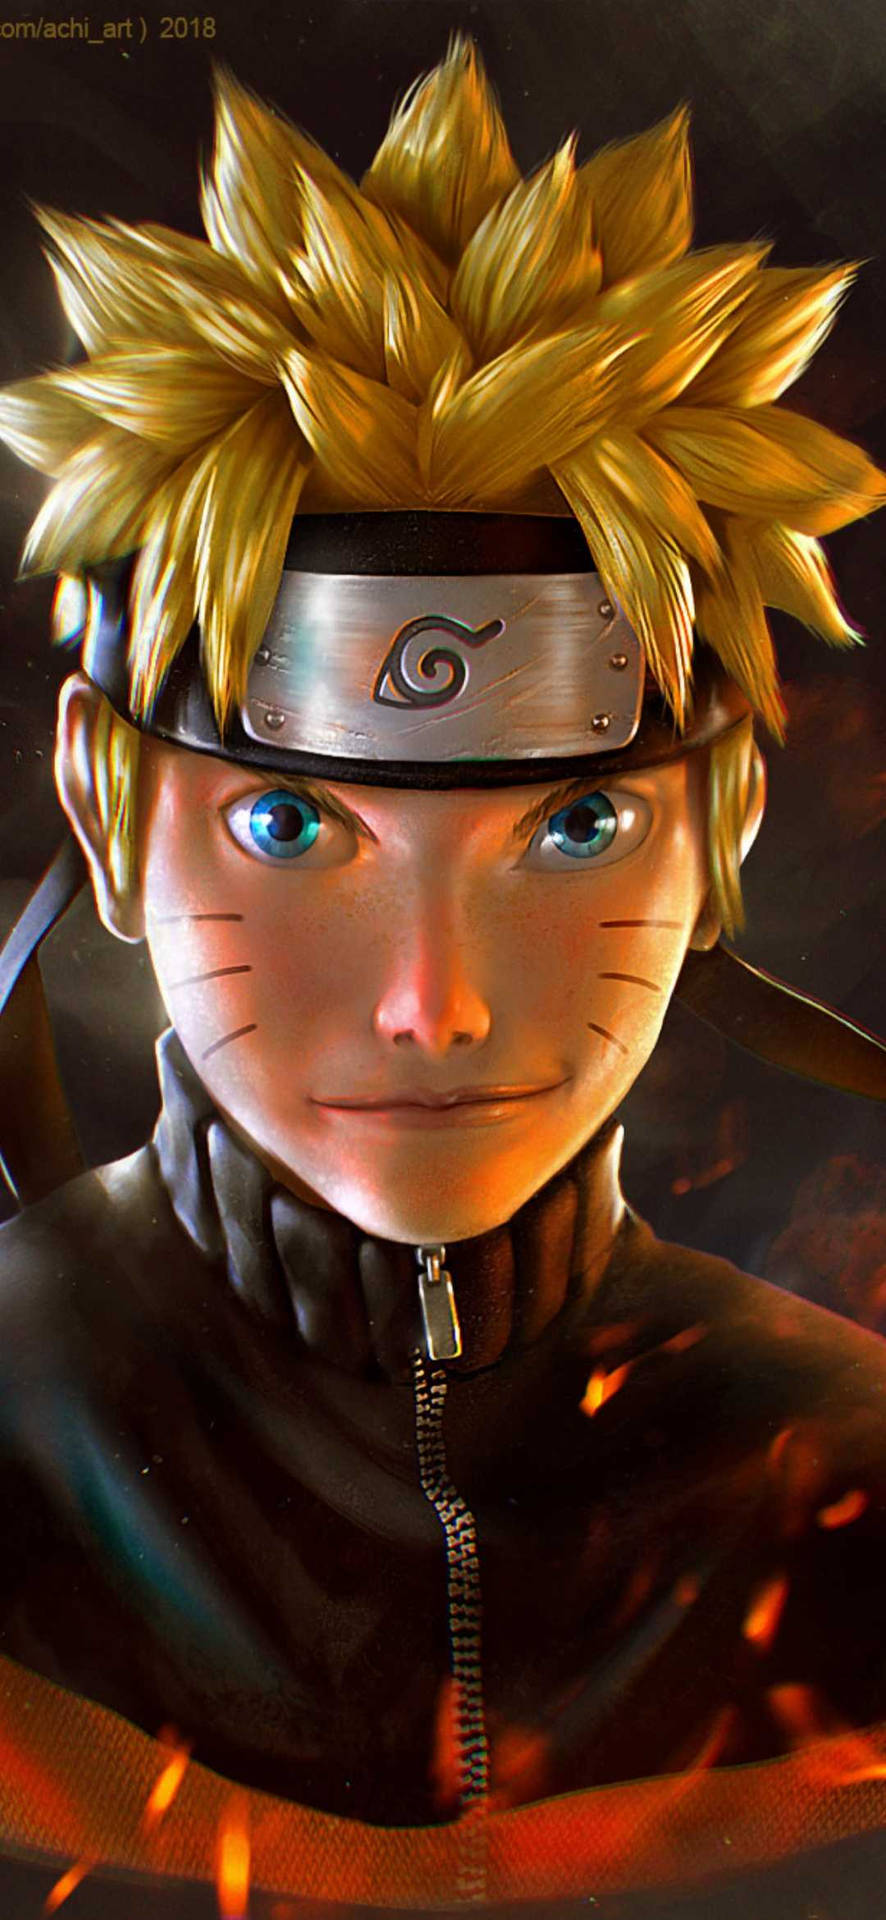 Free Naruto Mobile 4k Wallpaper Downloads, [100+] Naruto Mobile 4k  Wallpapers for FREE 